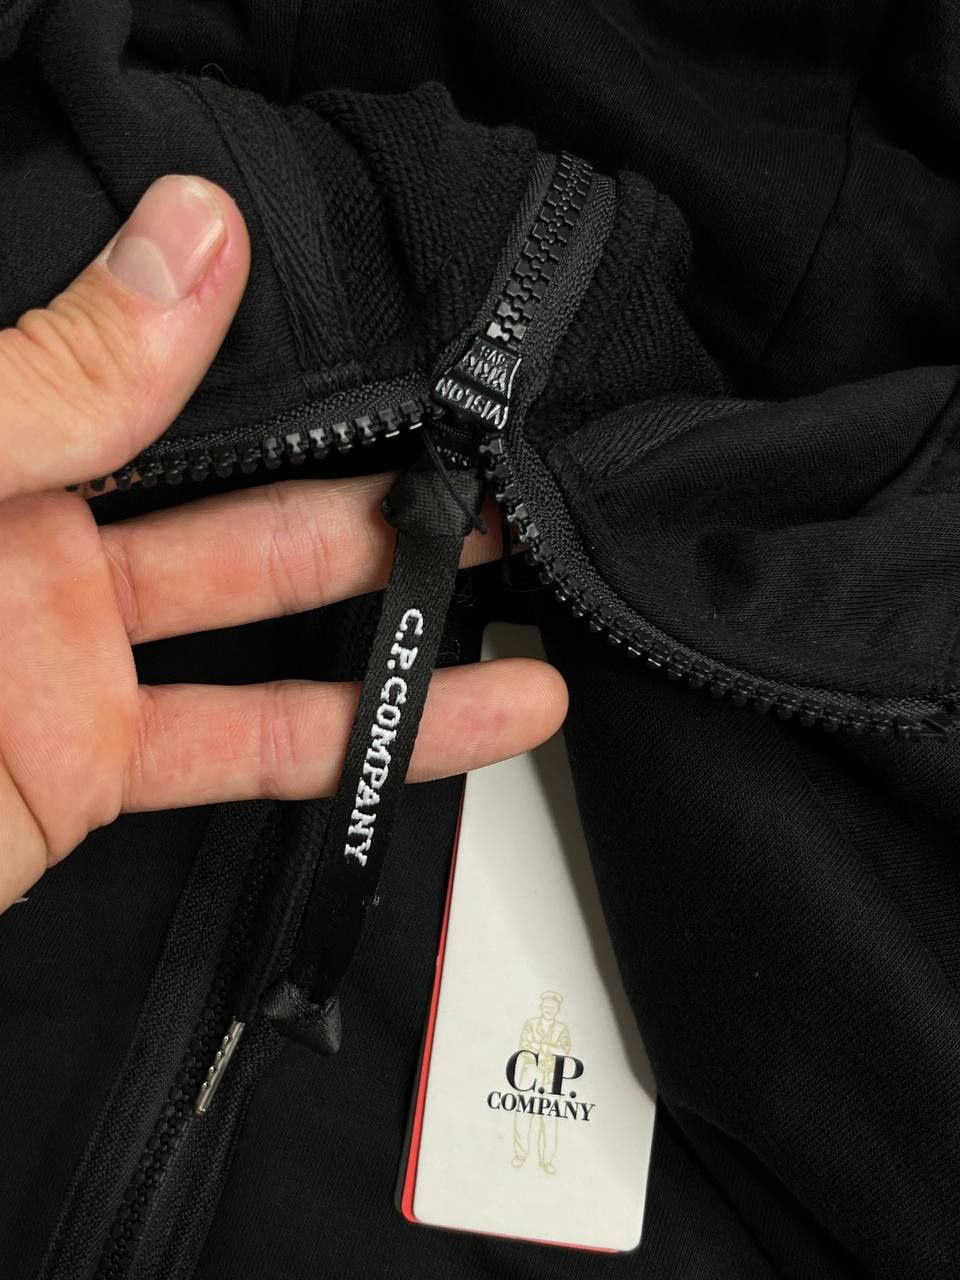 C.P.COMPANY black zip hoodie || усі бірки || 40% знижка